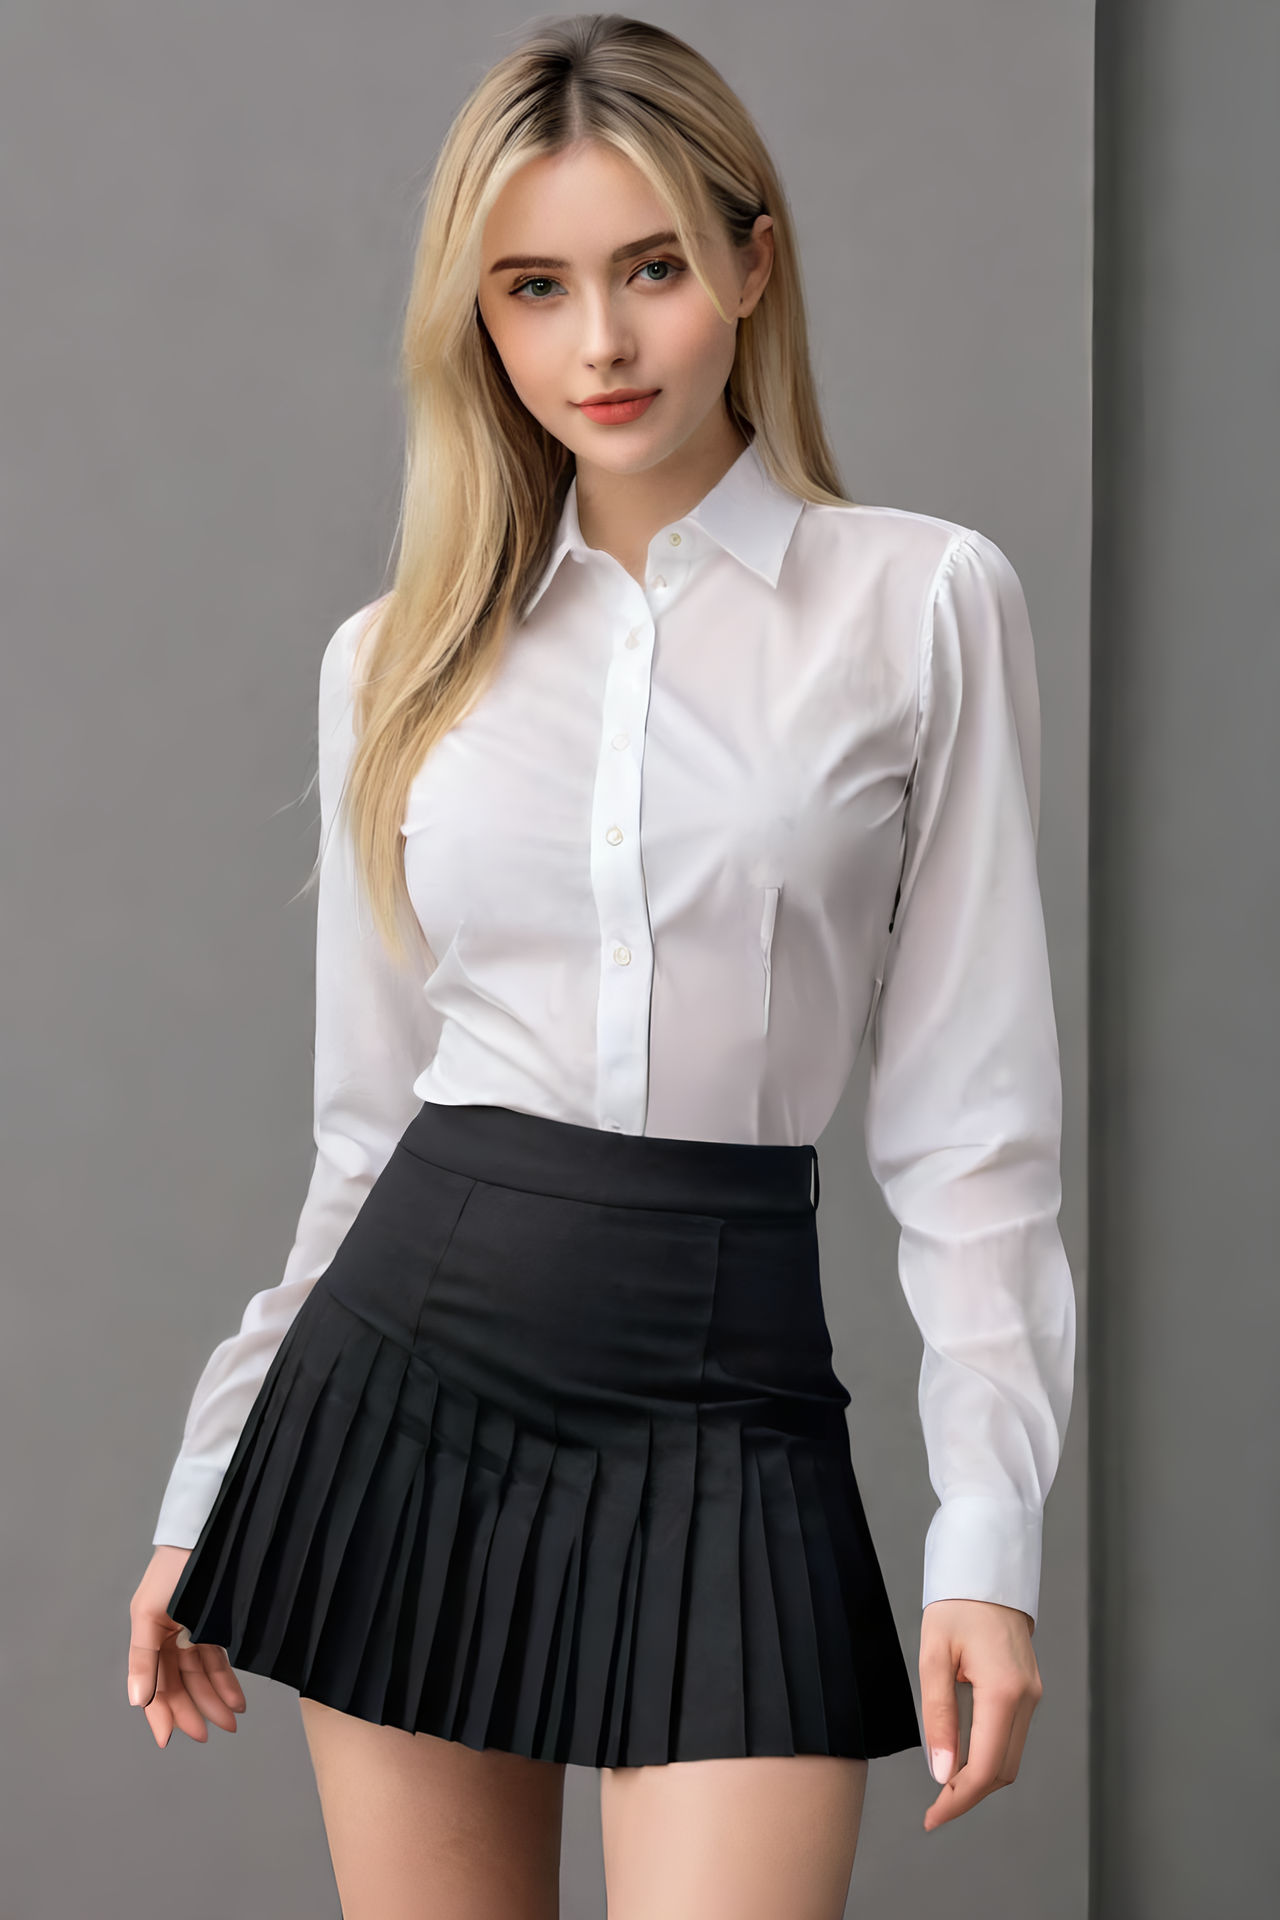 Blonde in white shirt and pleated skirt by daveresta on DeviantArt